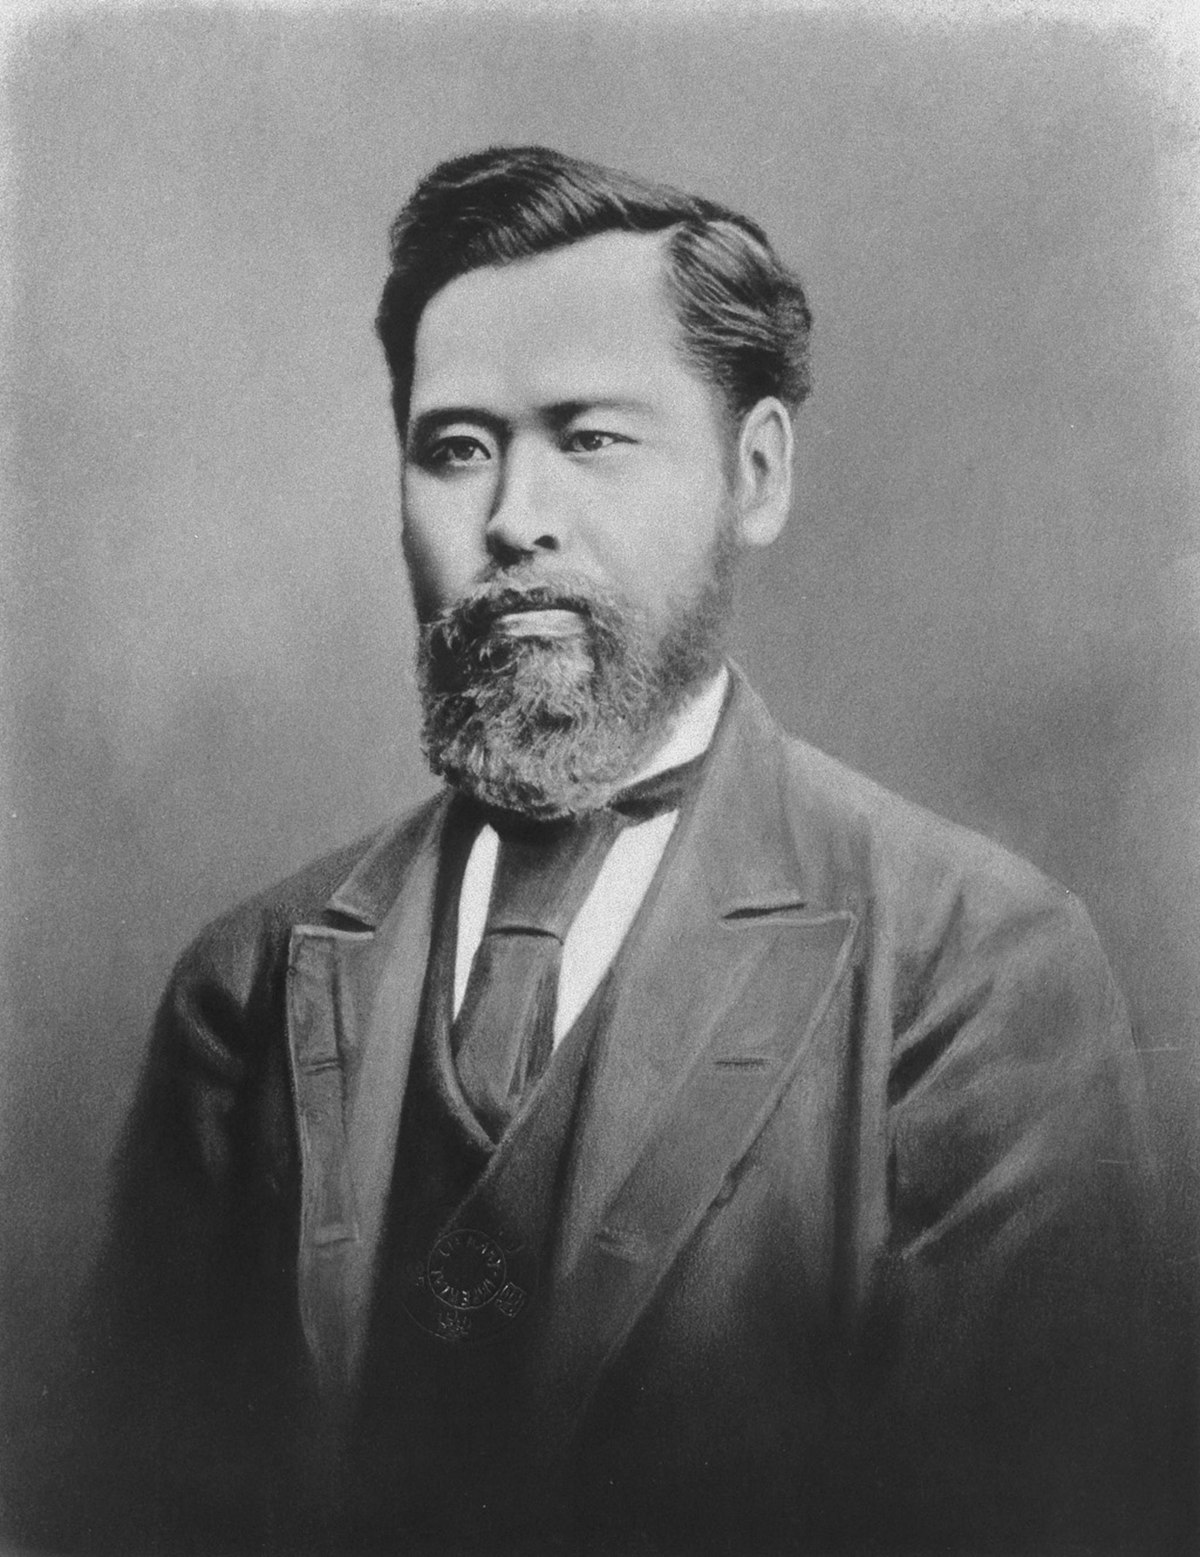 Education Policy in the Meiji Era